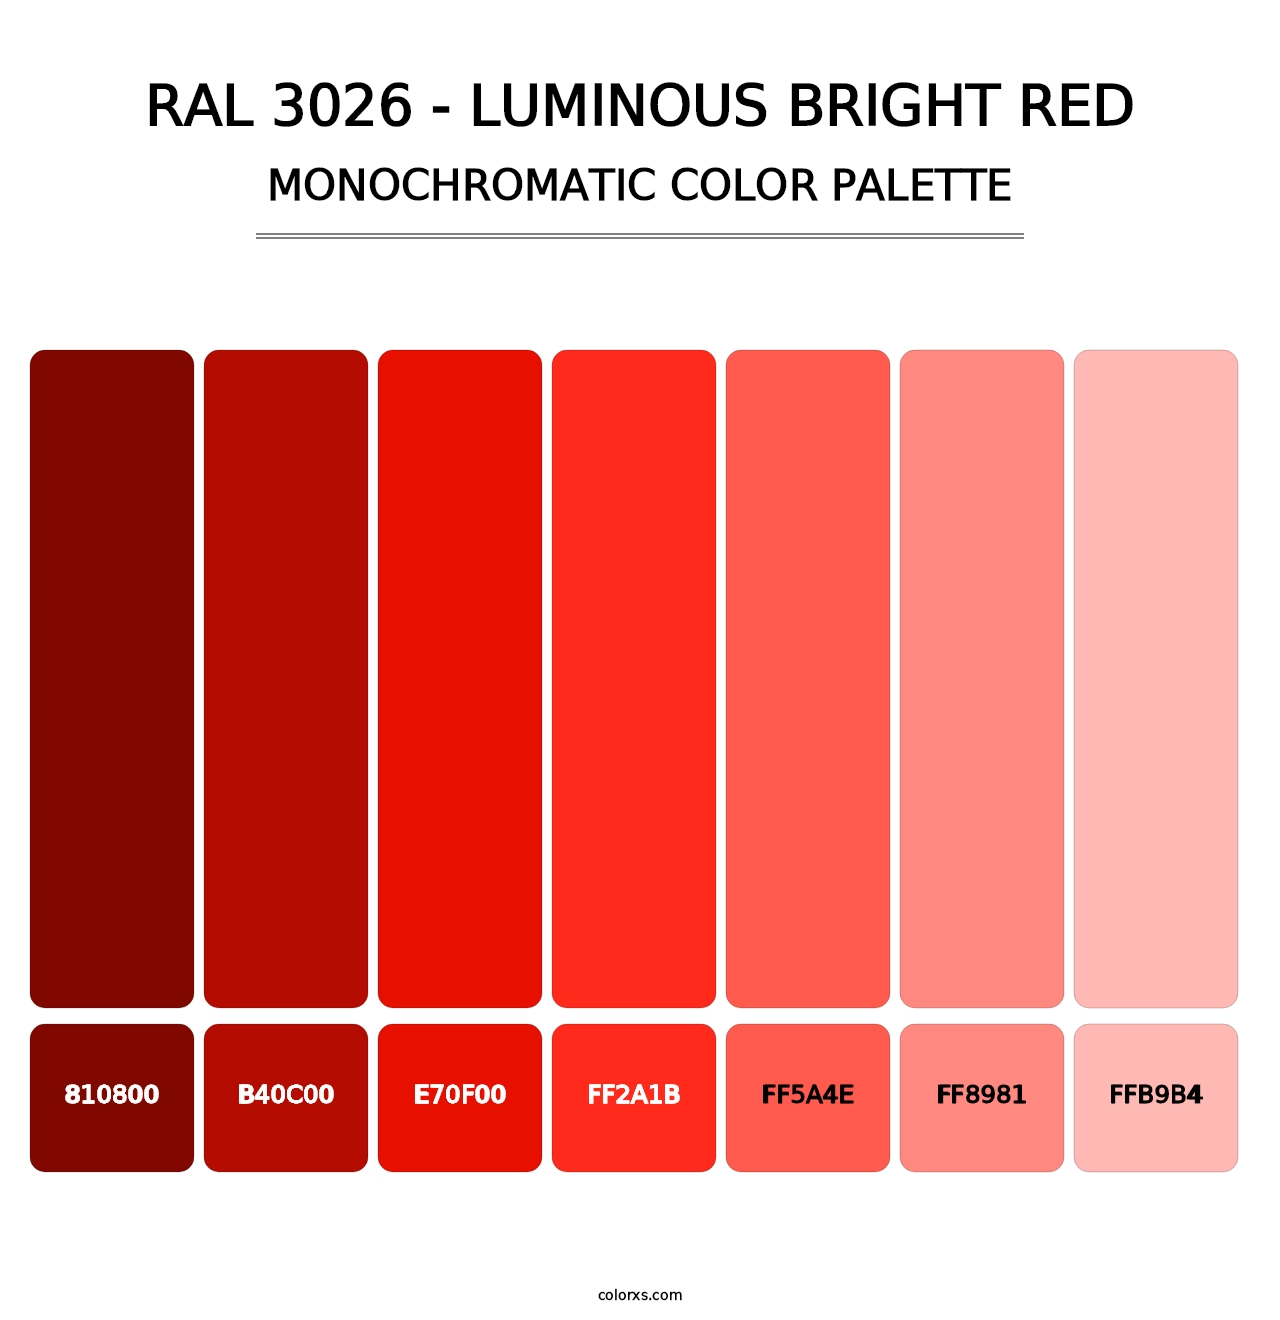 RAL 3026 - Luminous Bright Red - Monochromatic Color Palette